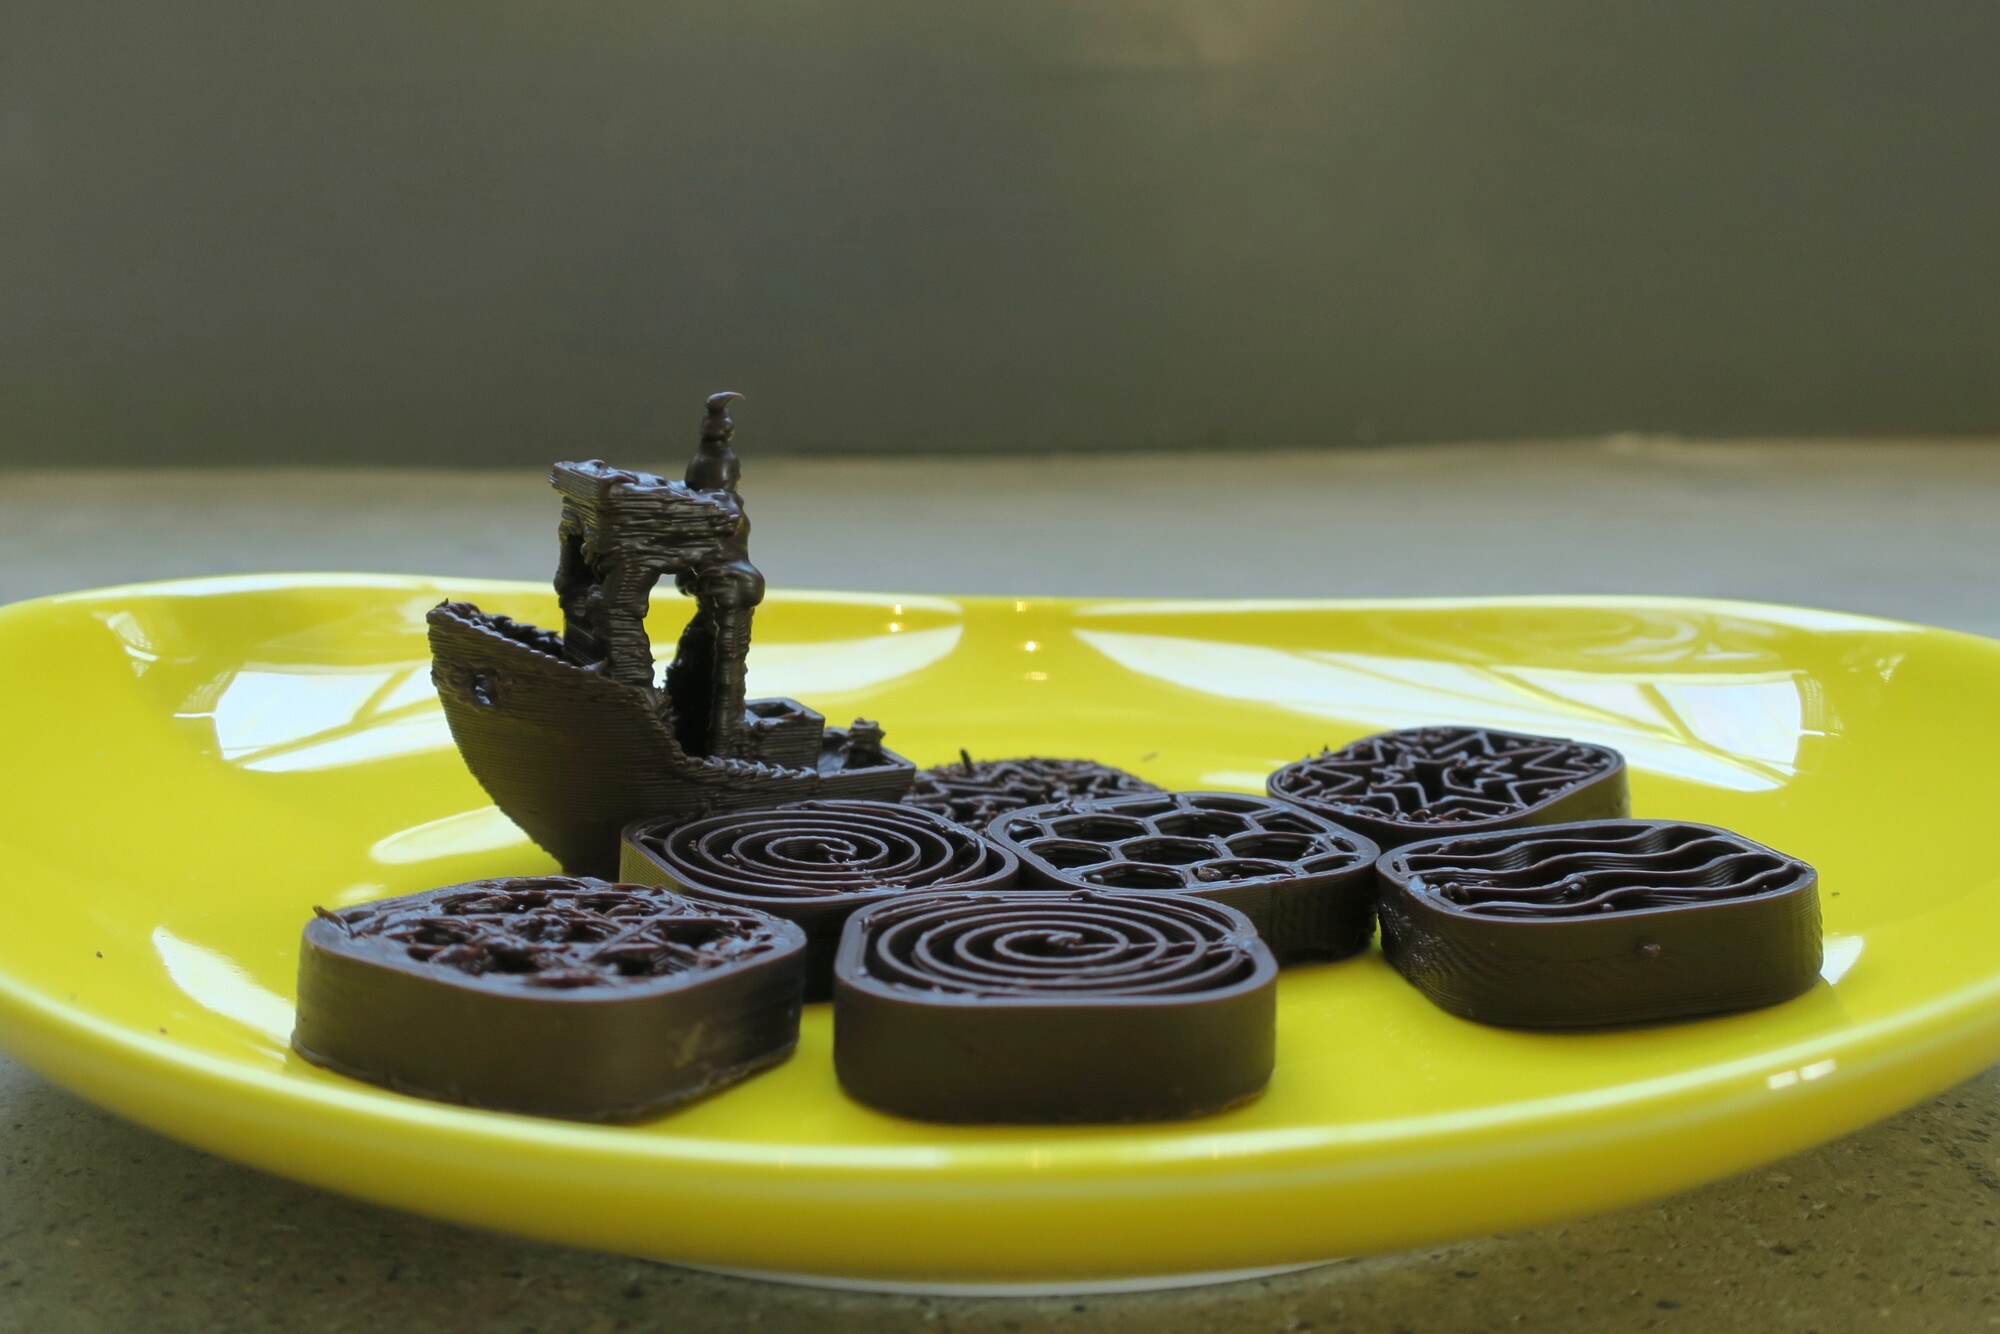 A dish of bespoke 3D printed chocolates